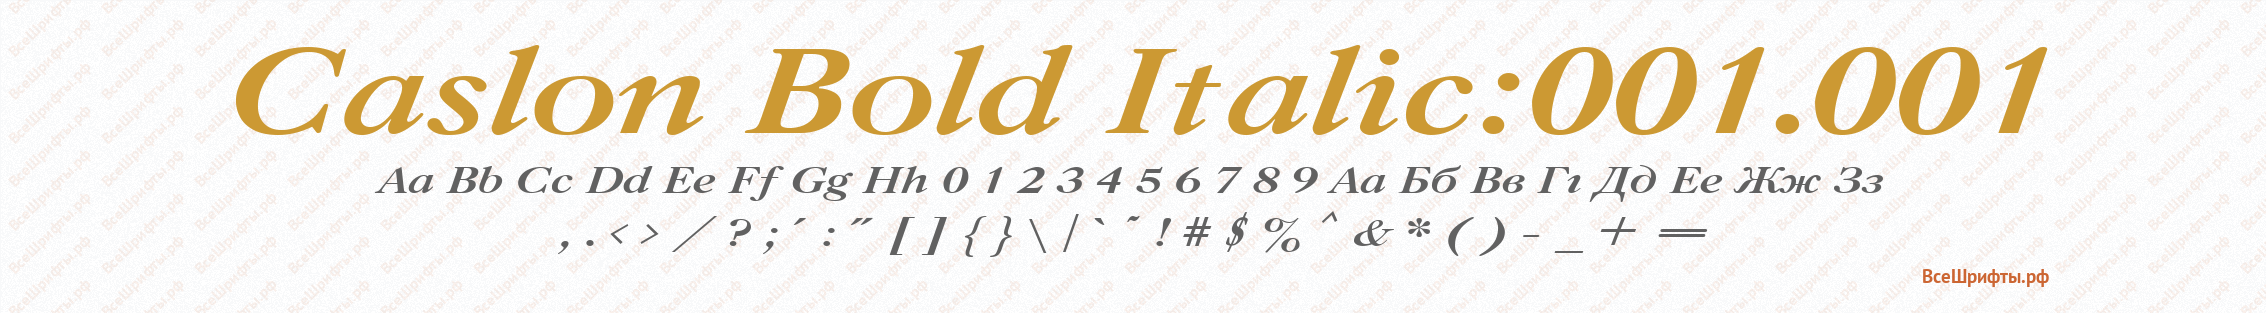 Шрифт Caslon Bold Italic:001.001